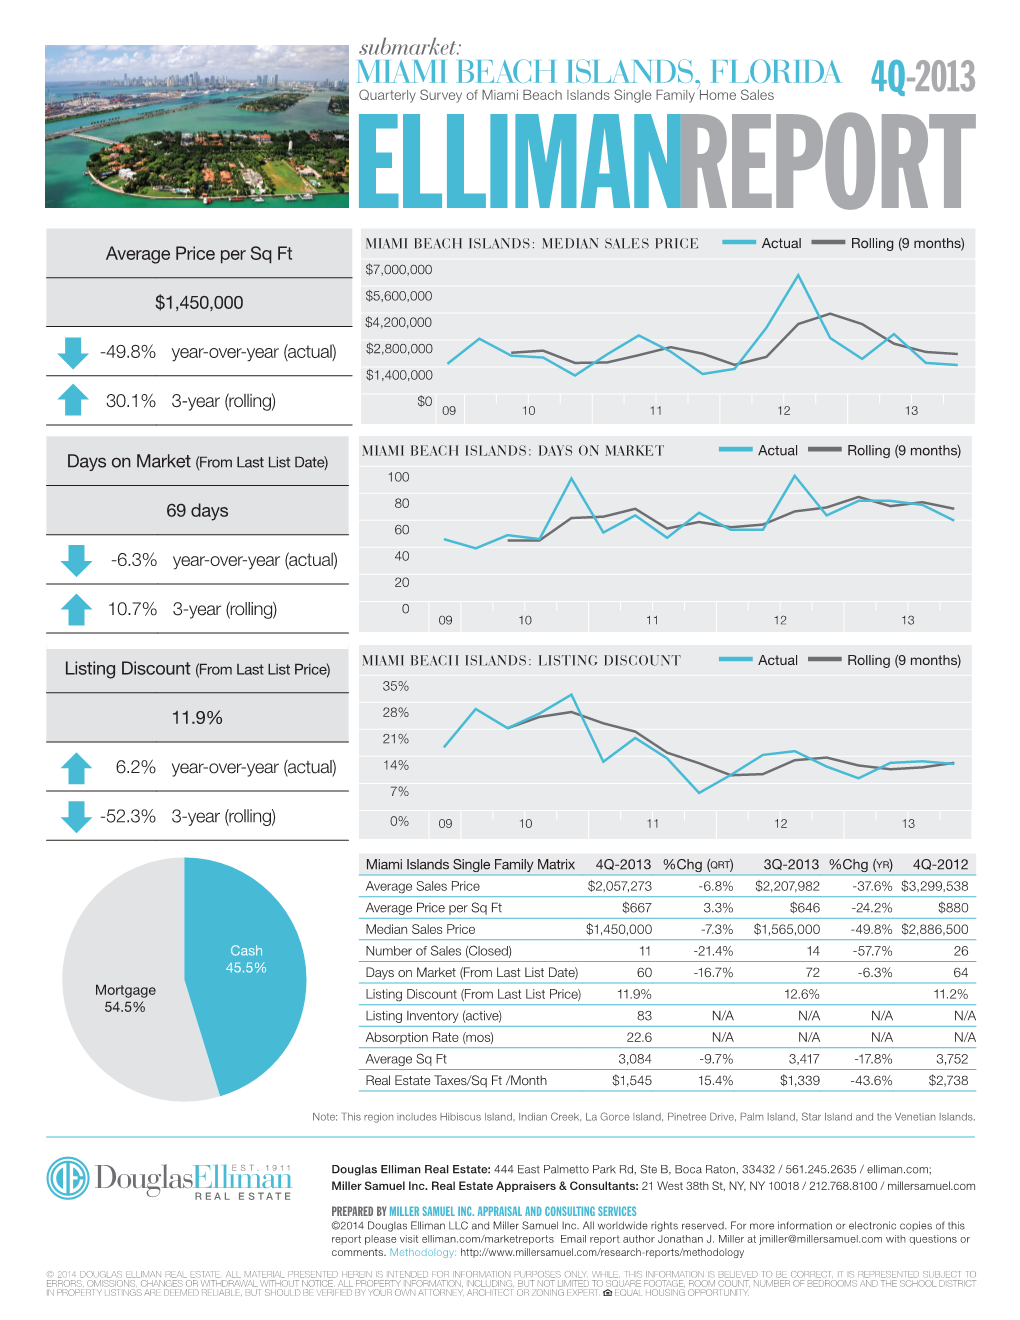 The Elliman Report: 4Q-2013 Miami Beach Islands Prepared by Miller Samuel Real Estate Appraisers